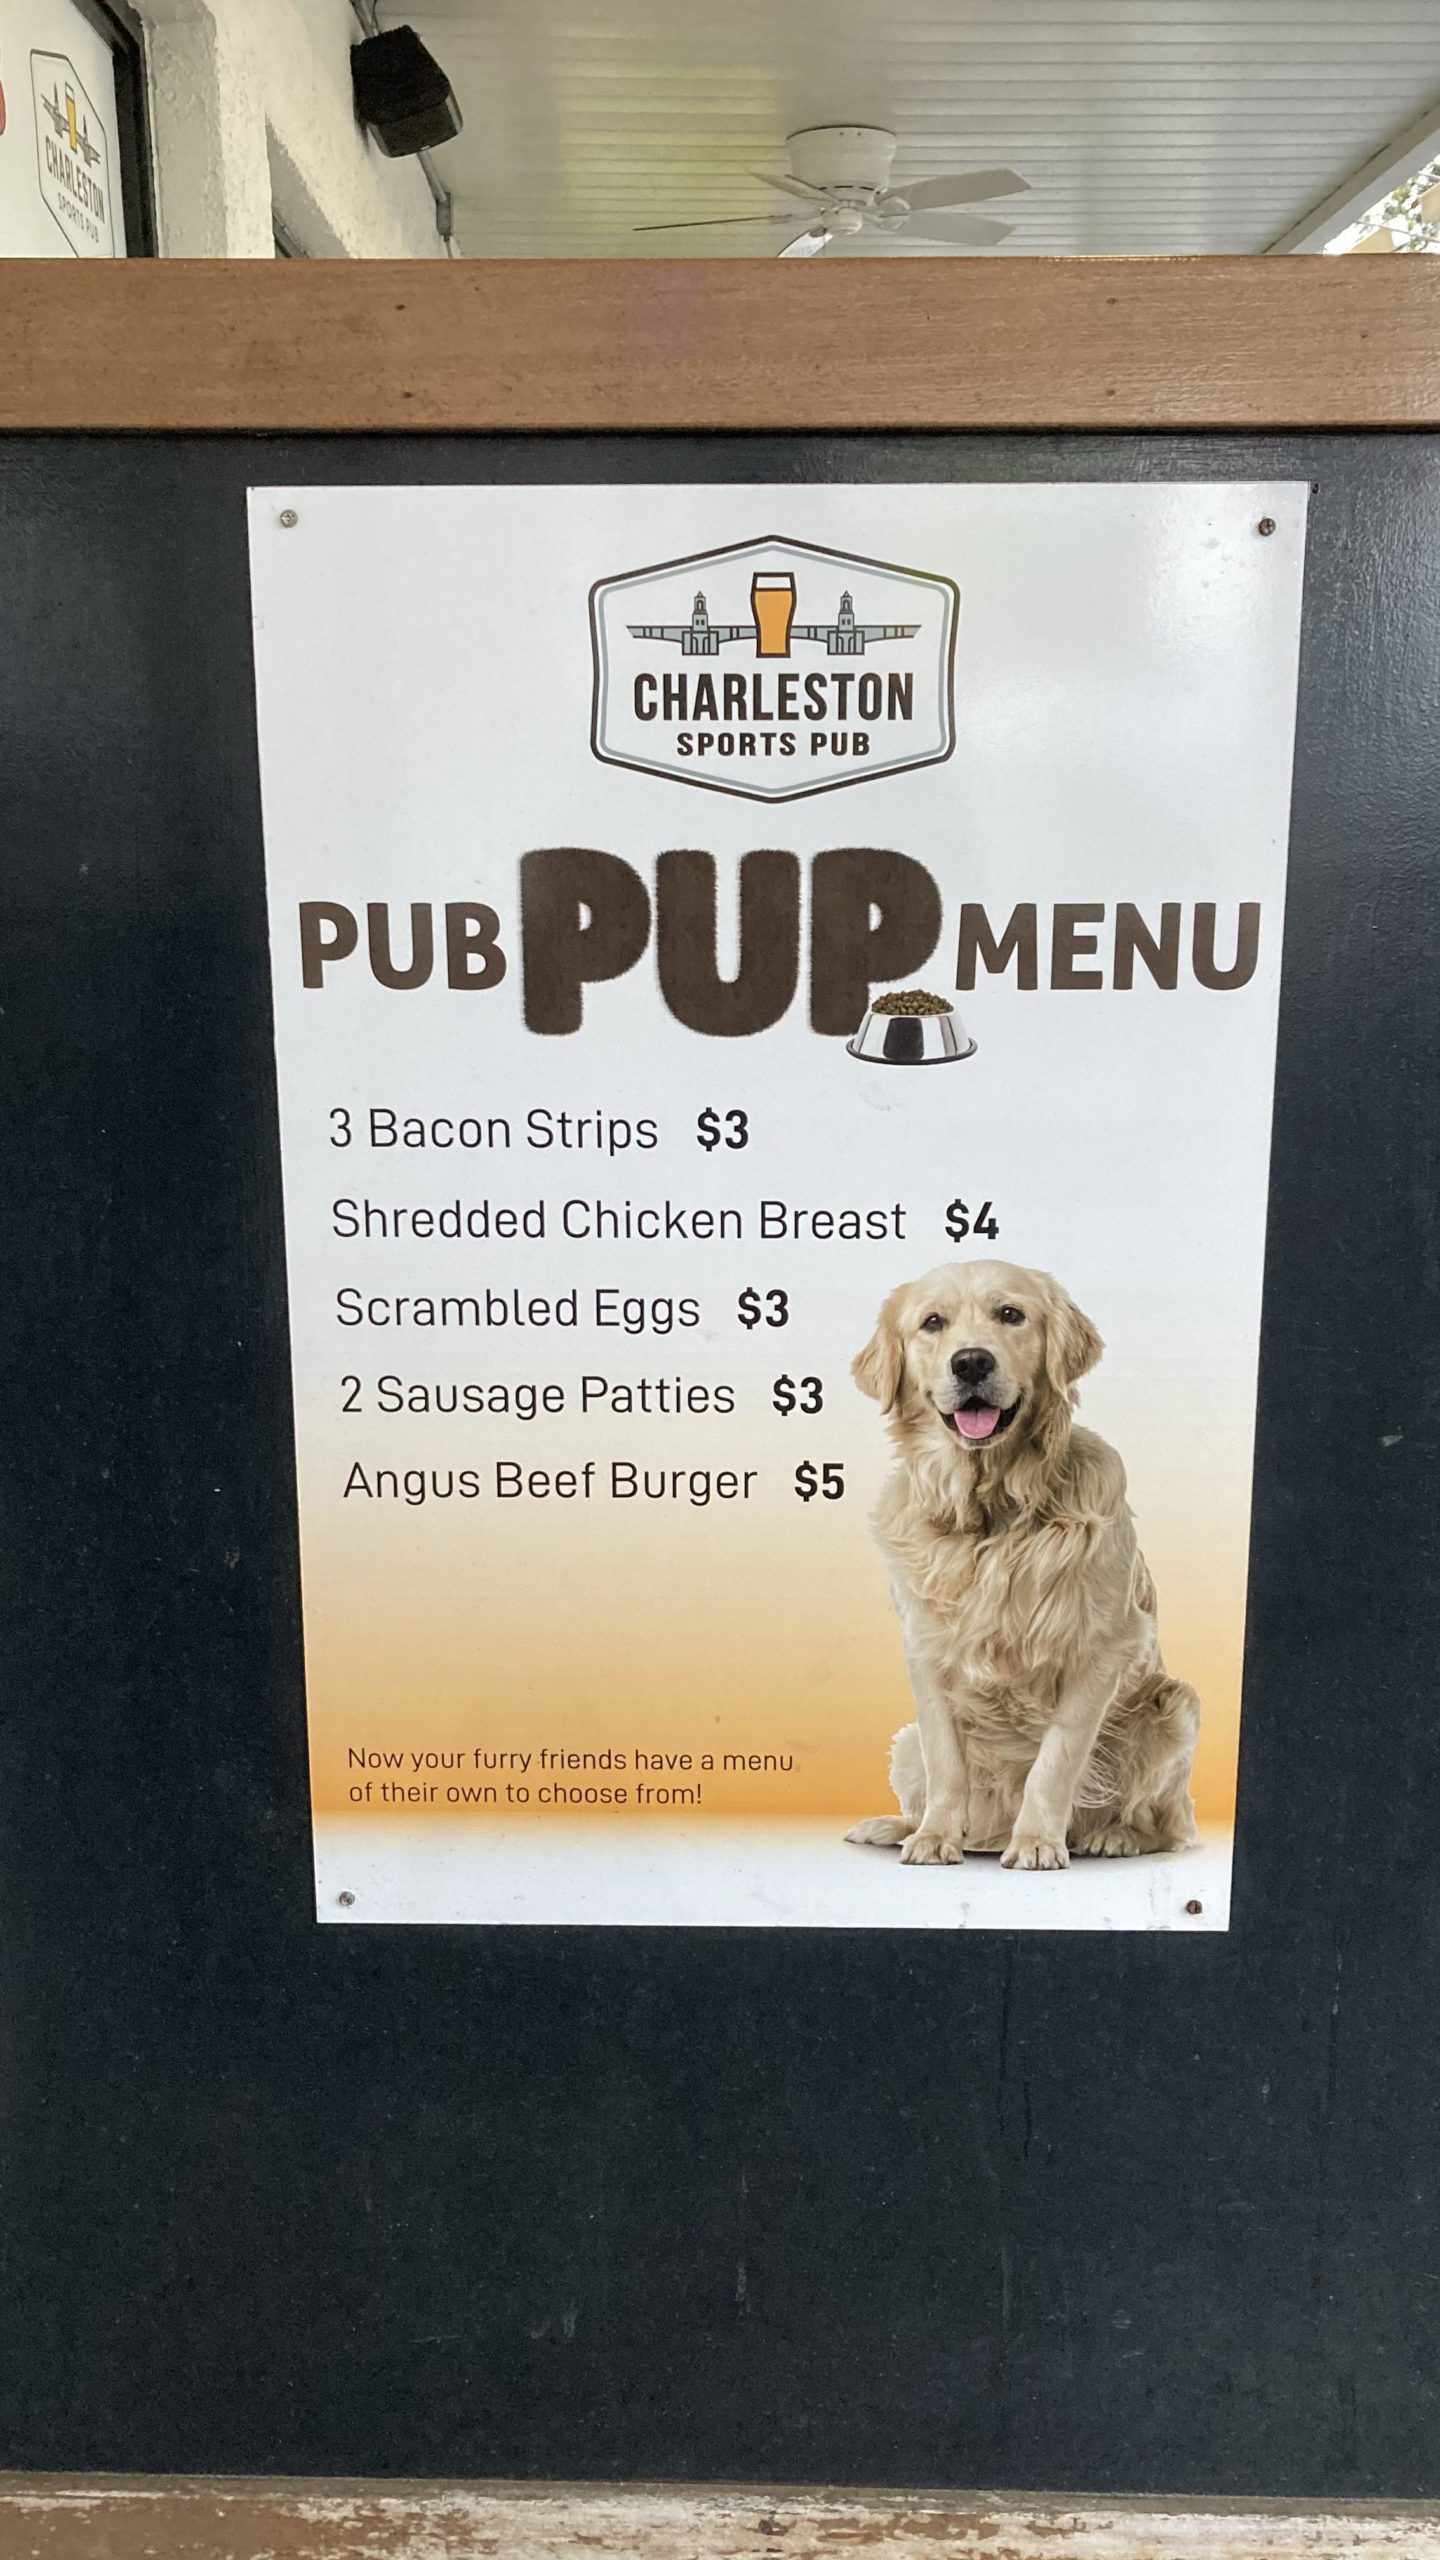 Pubs+with+pup+menus%21